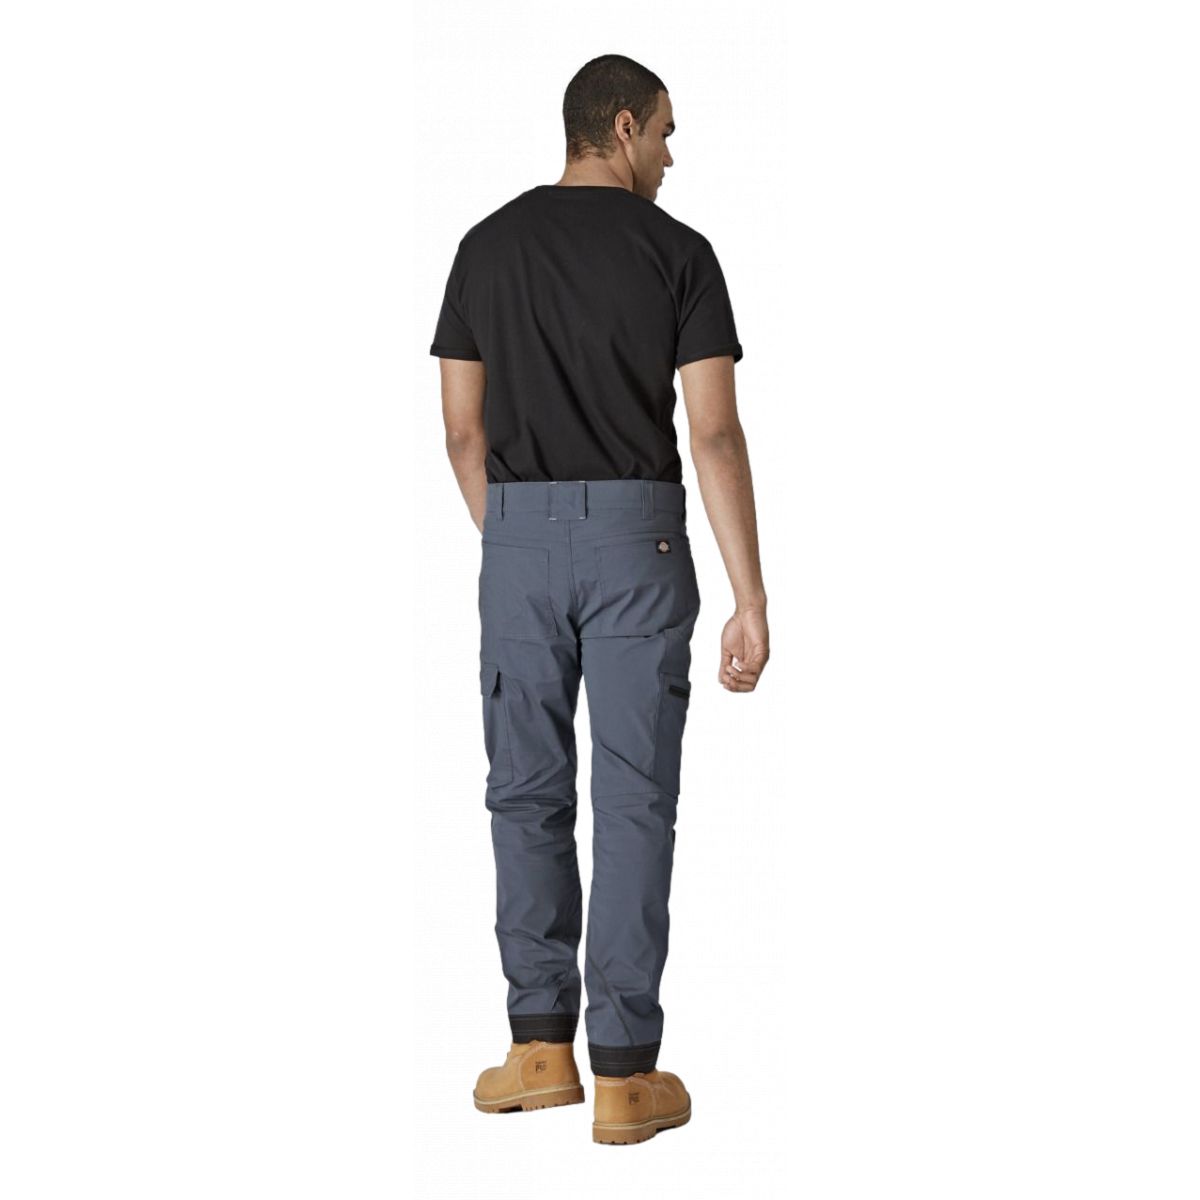 Pantalon léger Flex Gris - Dickies - Taille 38 3